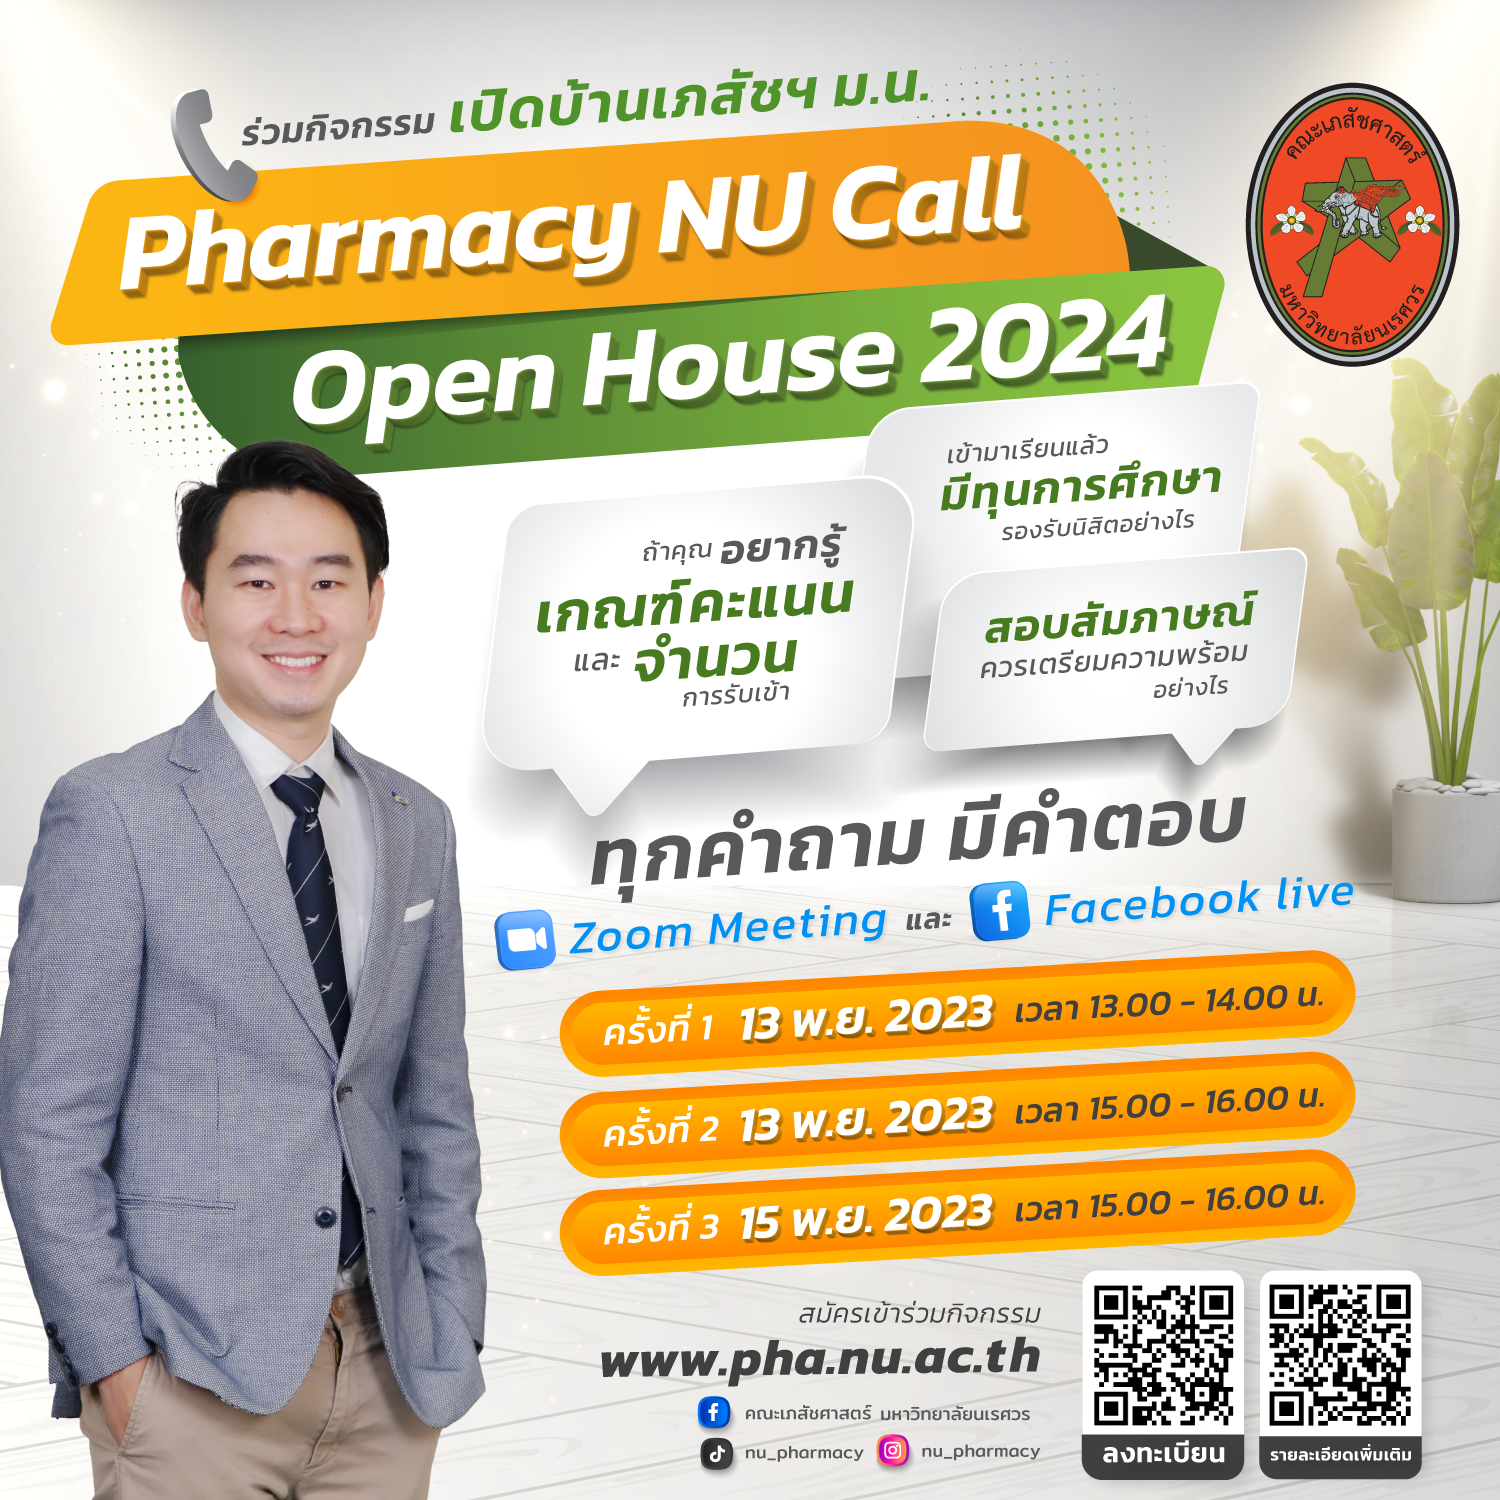 Pharmacy NU Call Open House 2024 “เปิดบ้านเภสัชฯ ม.น.”